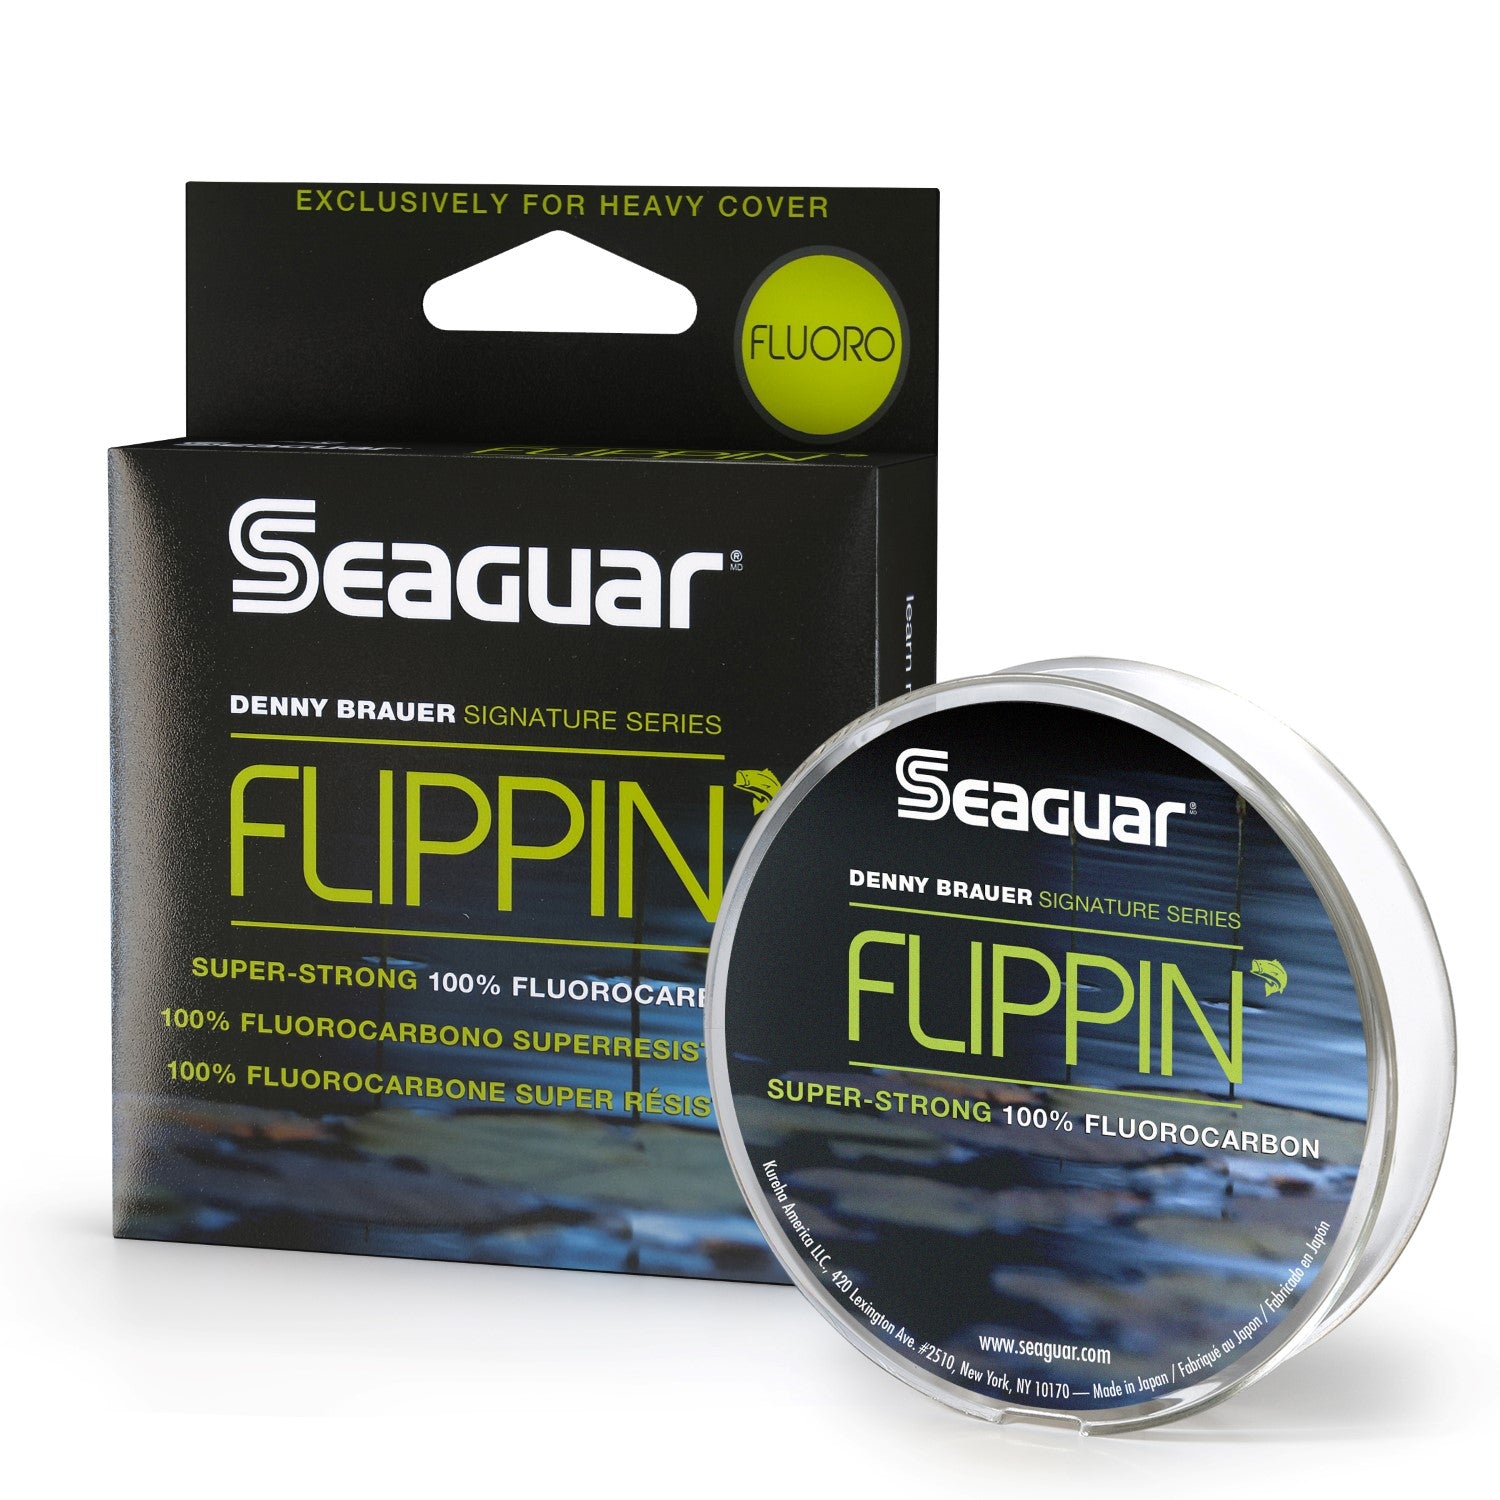 Seaguar Denny Brauer FlippiN Fluoro 25 Lb Test Fishing Line – The